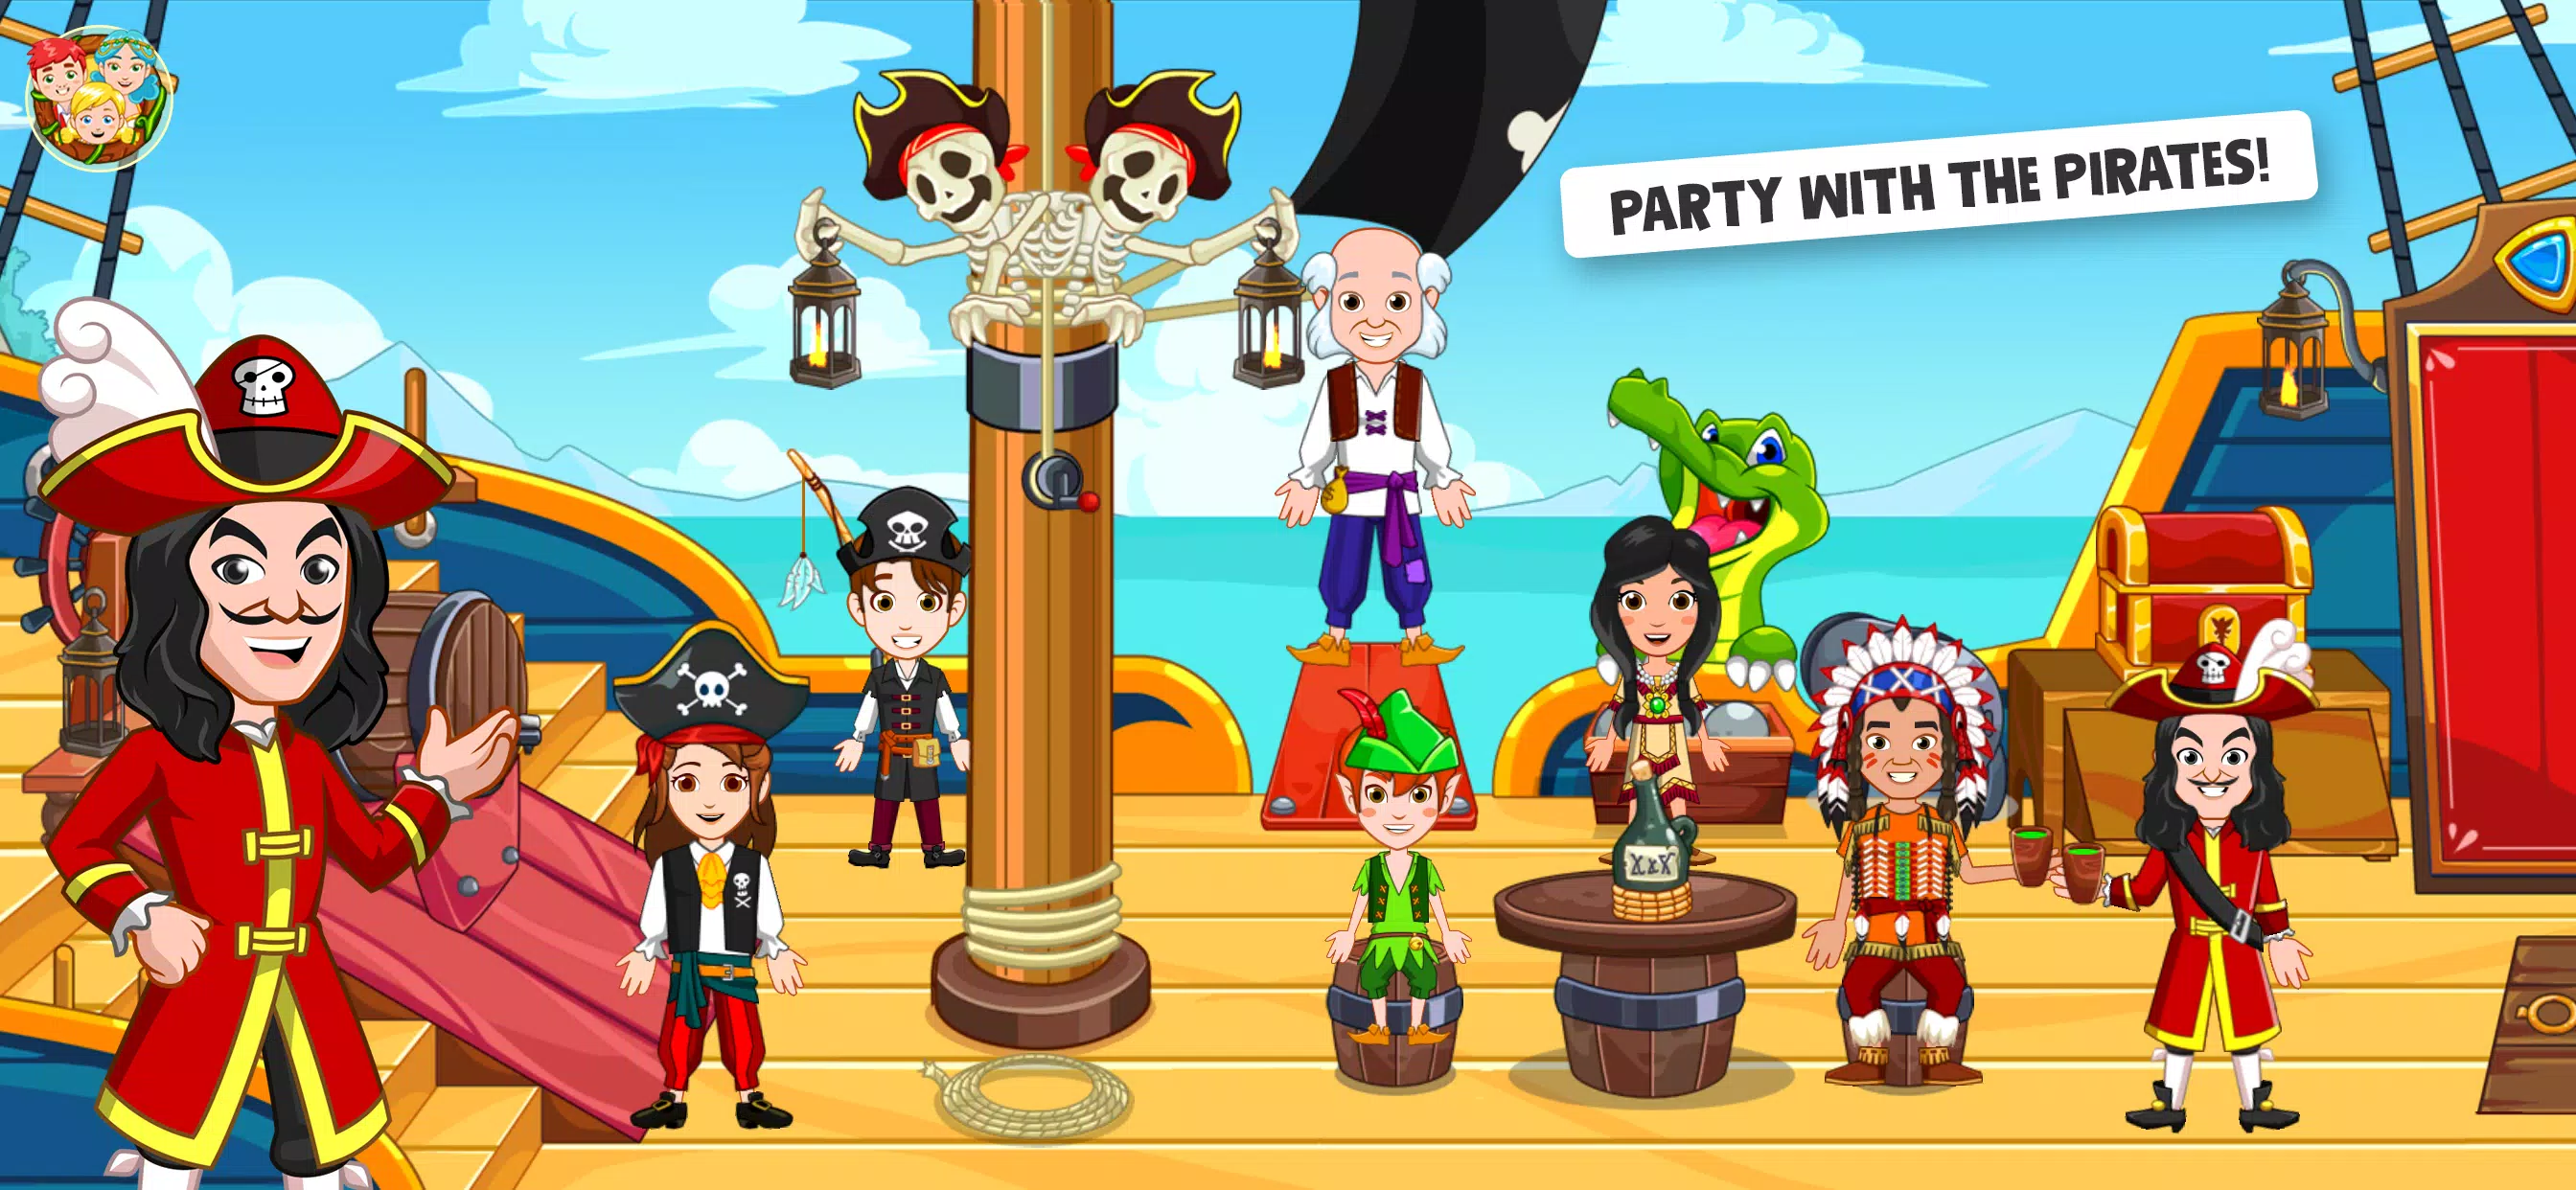 Wonderland:Peter Pan Adventure APK for Android Download